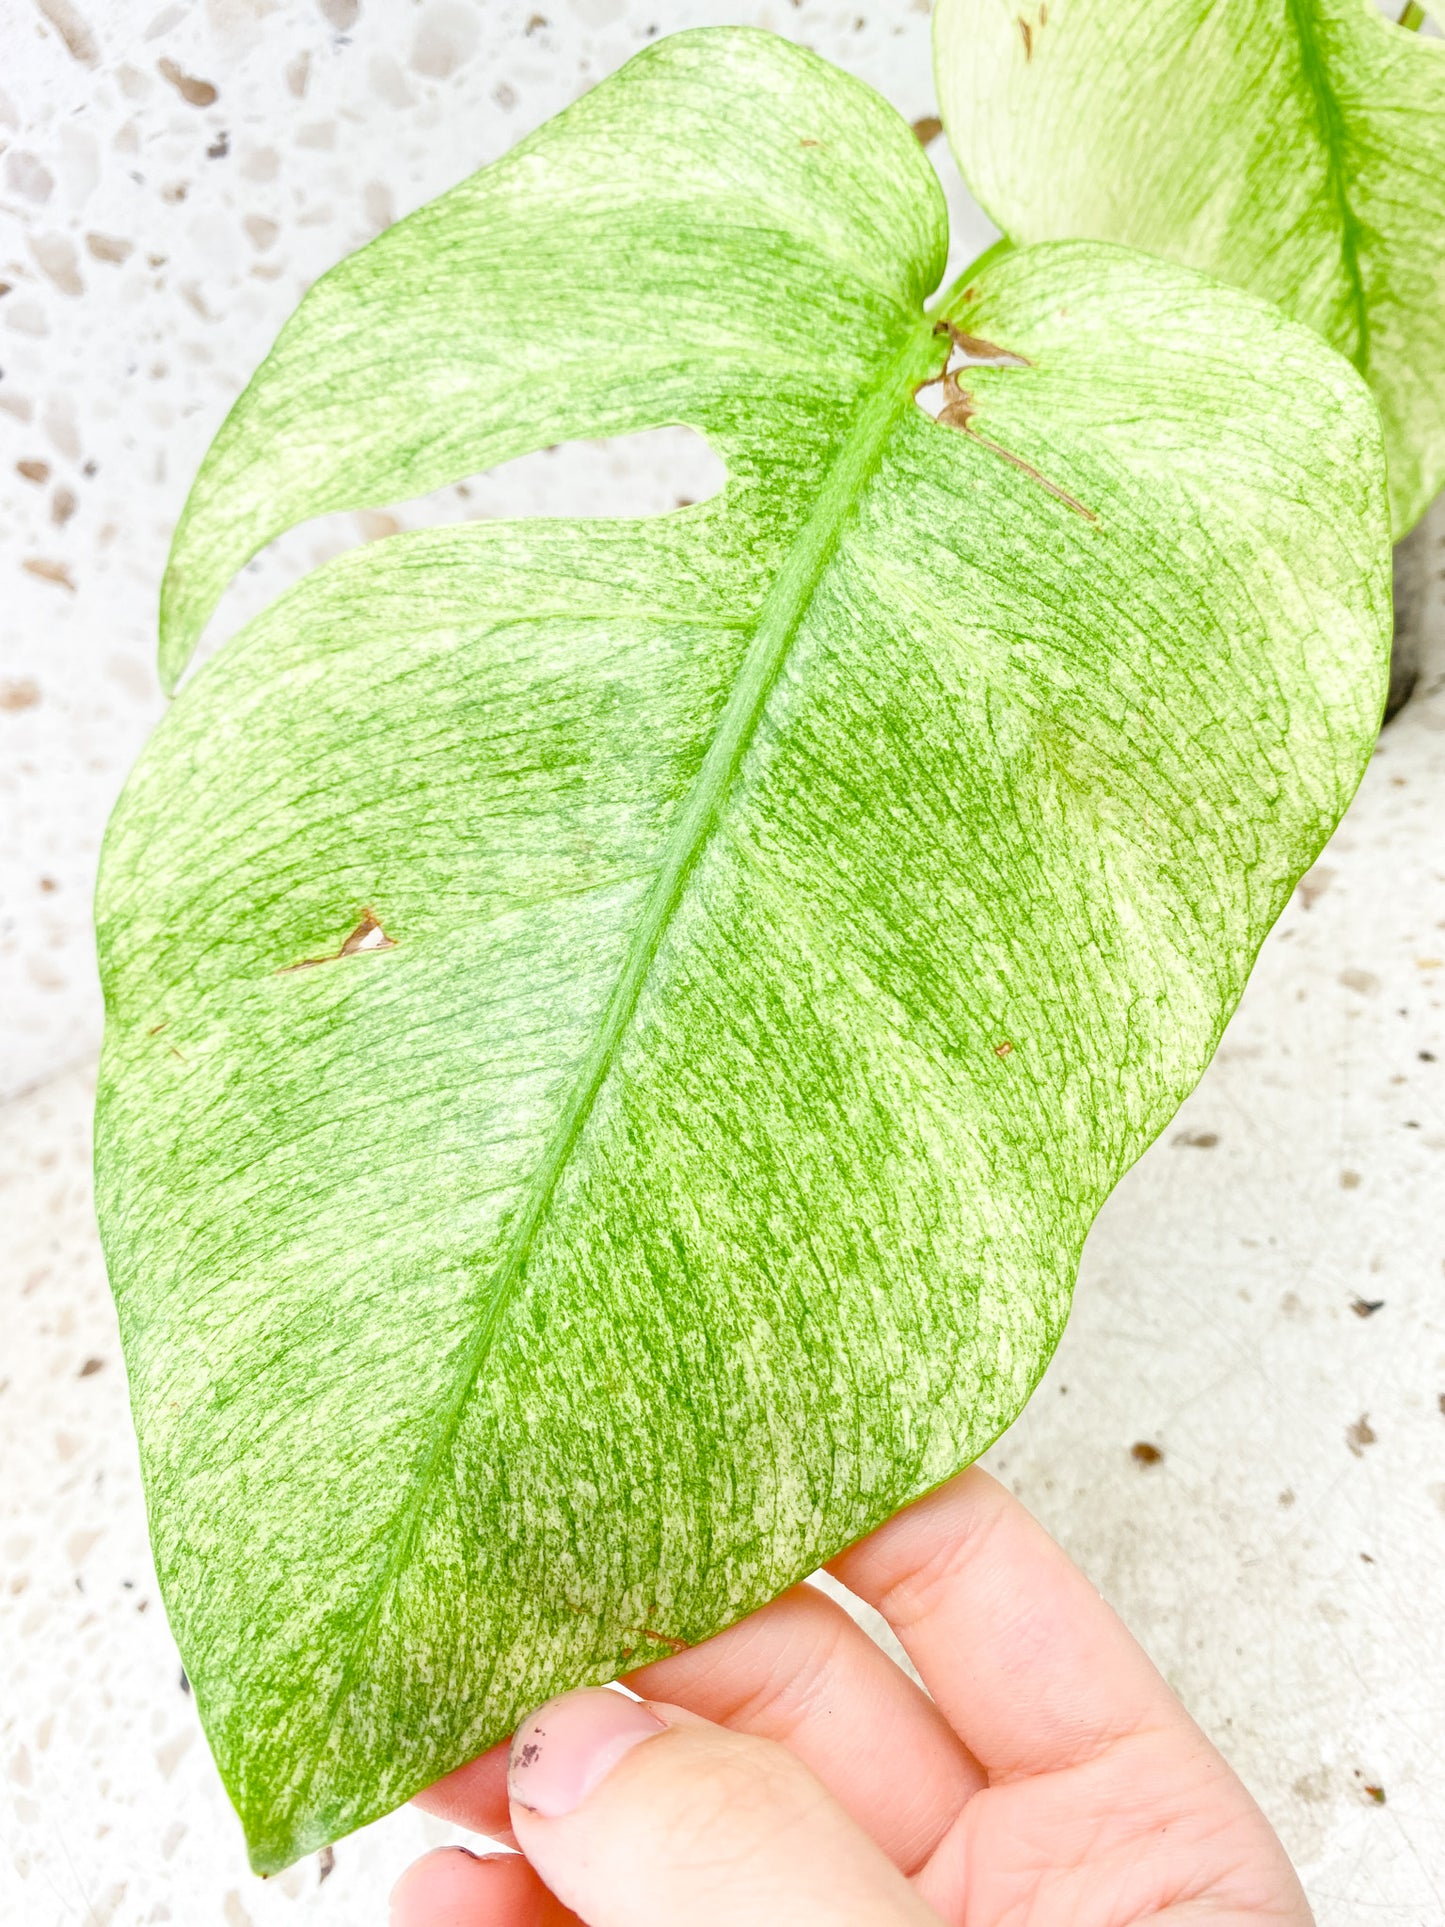 Monstera Full Mint rooting node 1 growing bud